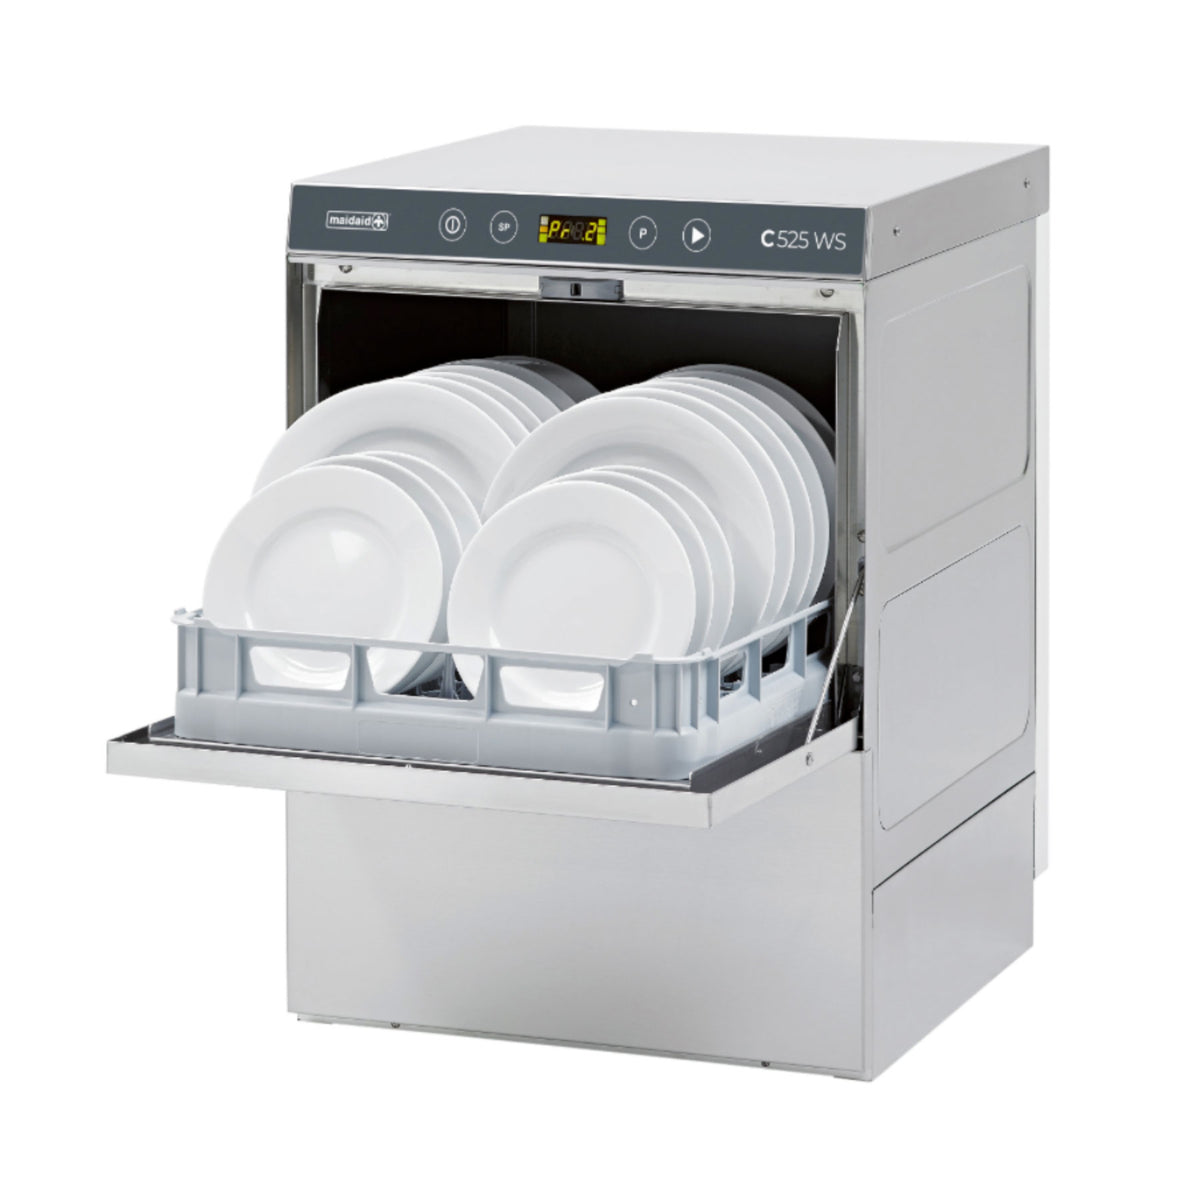 Maidaid C525WS undercounter dishwasher